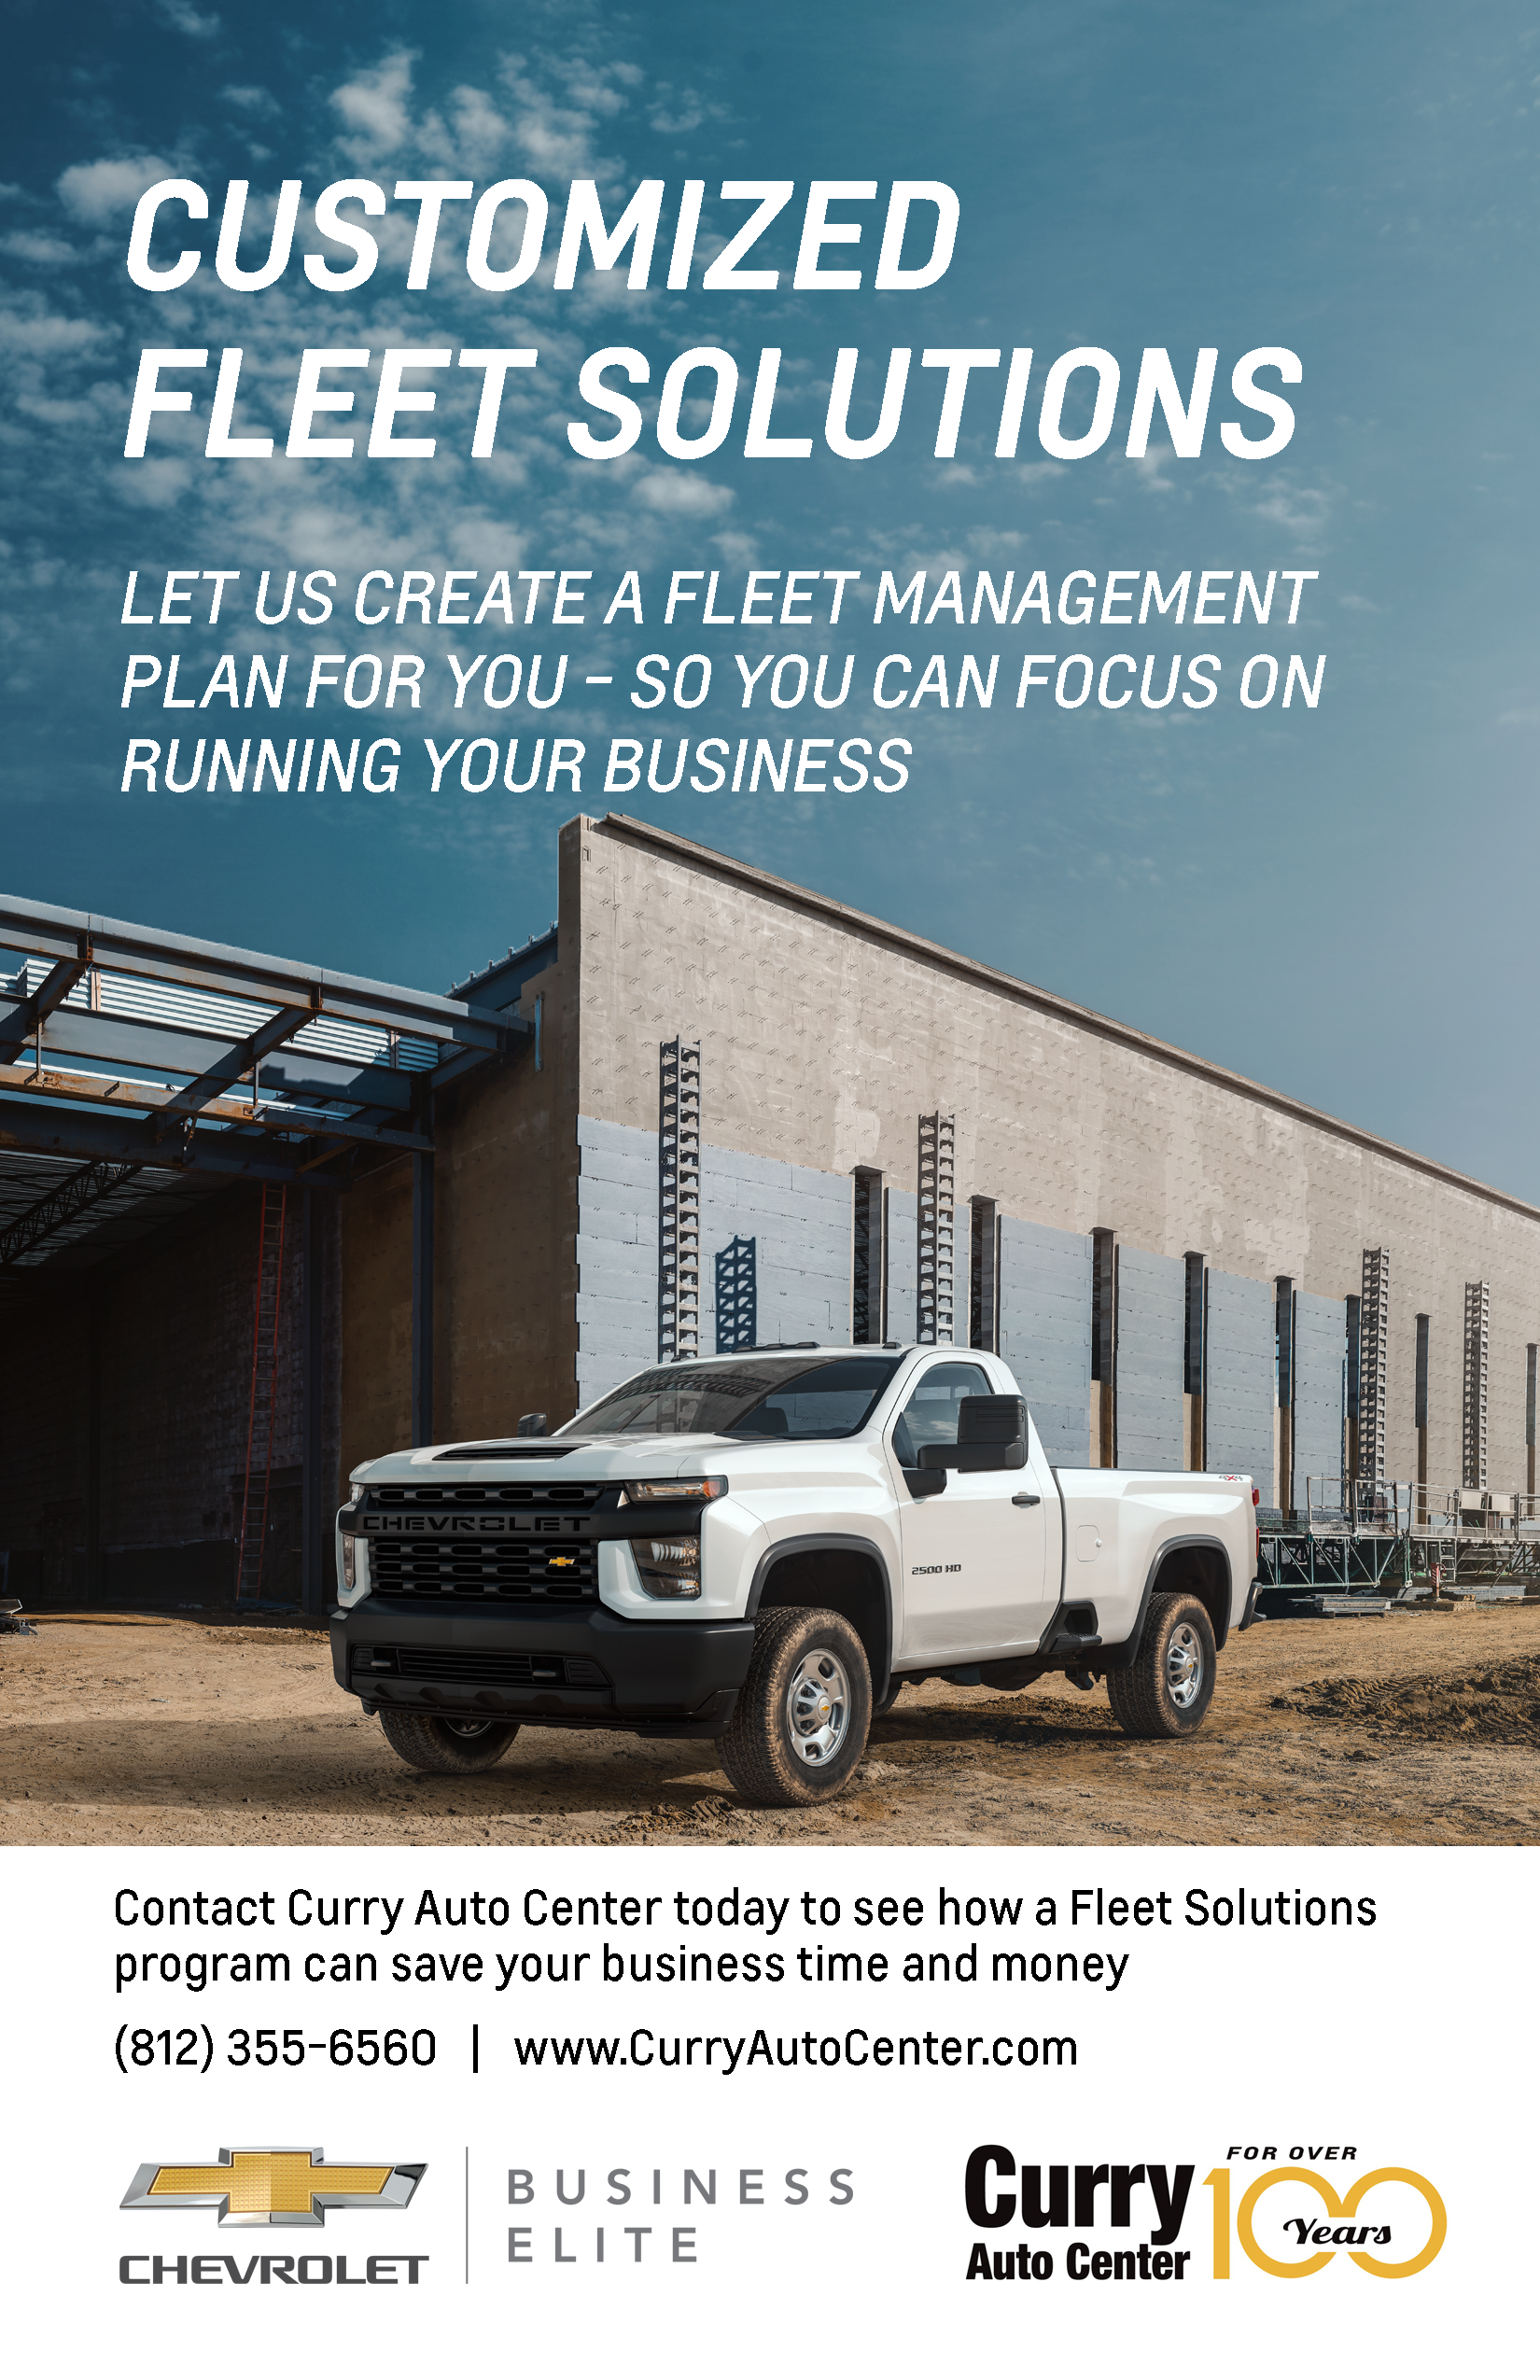 Curry Auto Center Fleet Solutions 